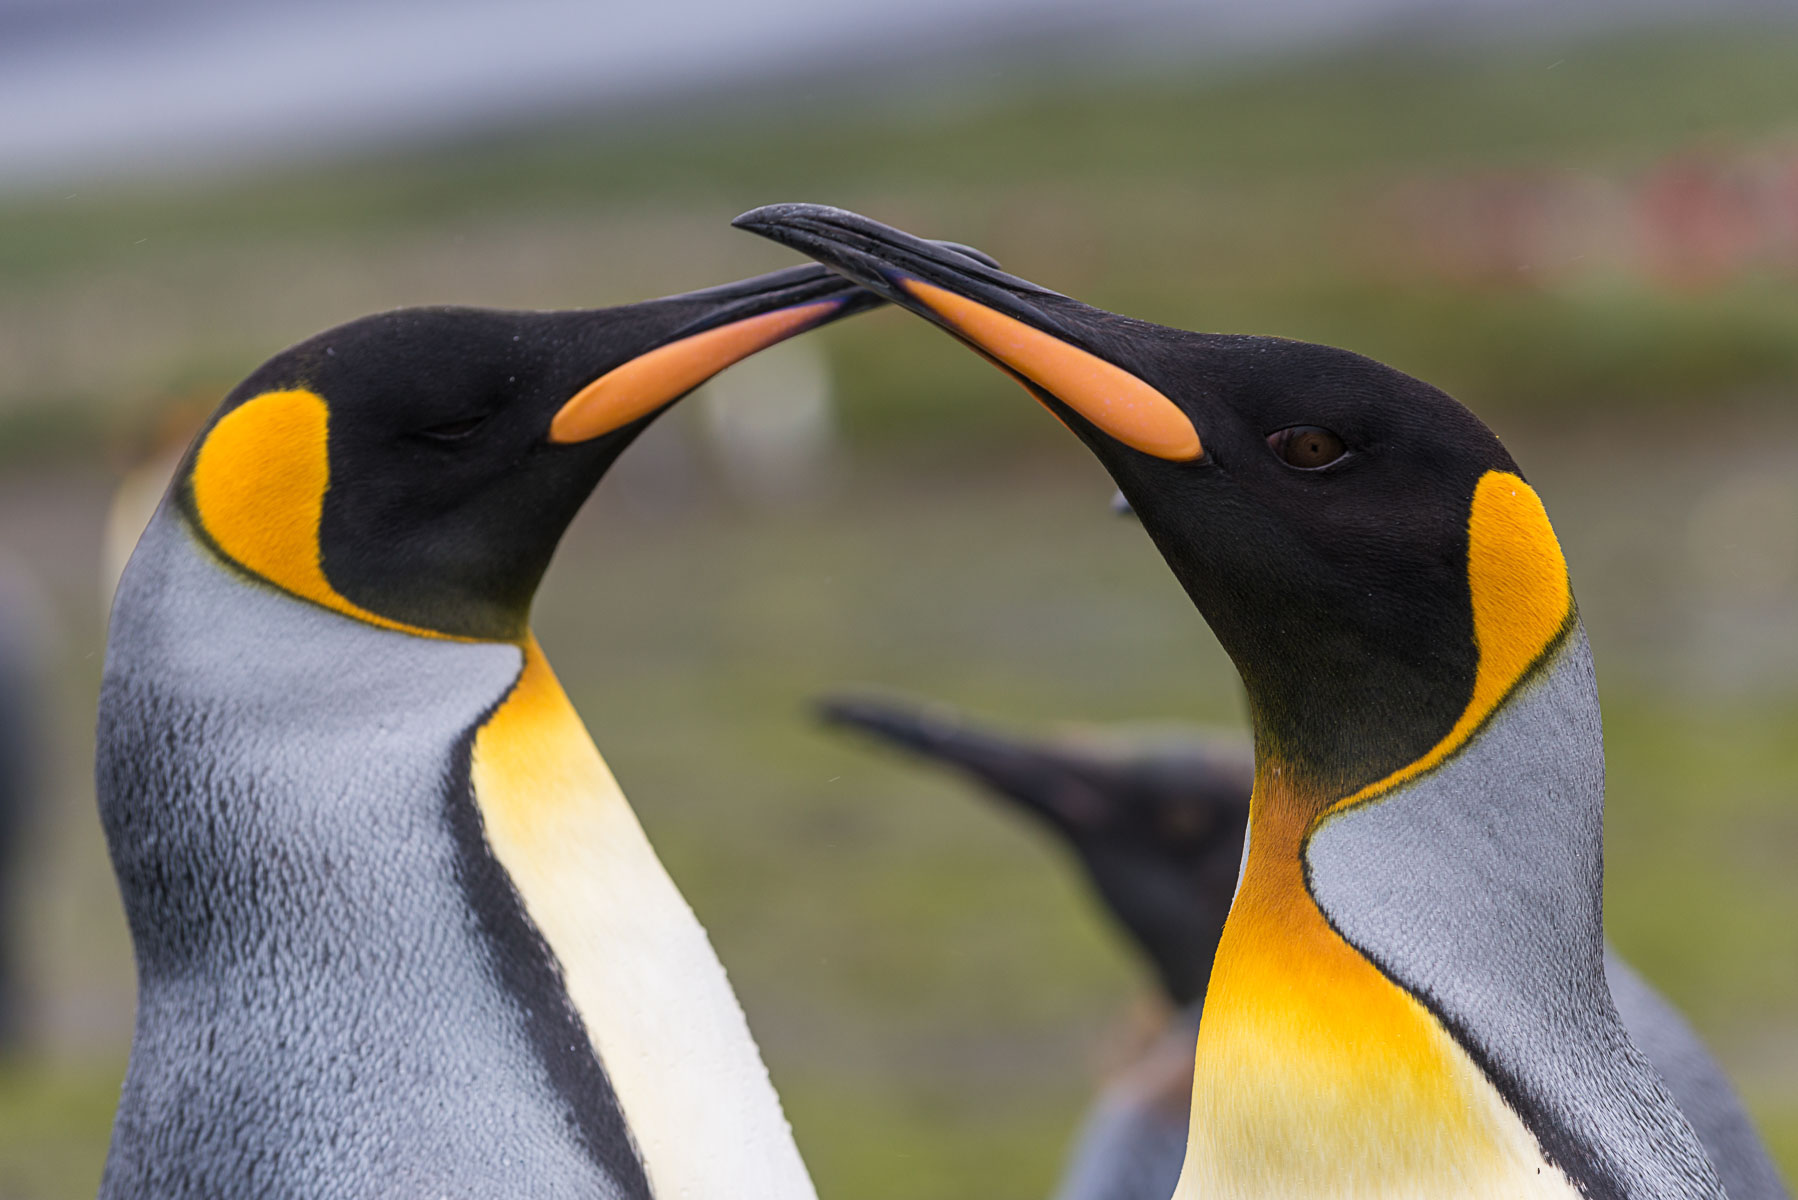 King penguins, Salisbury Plain